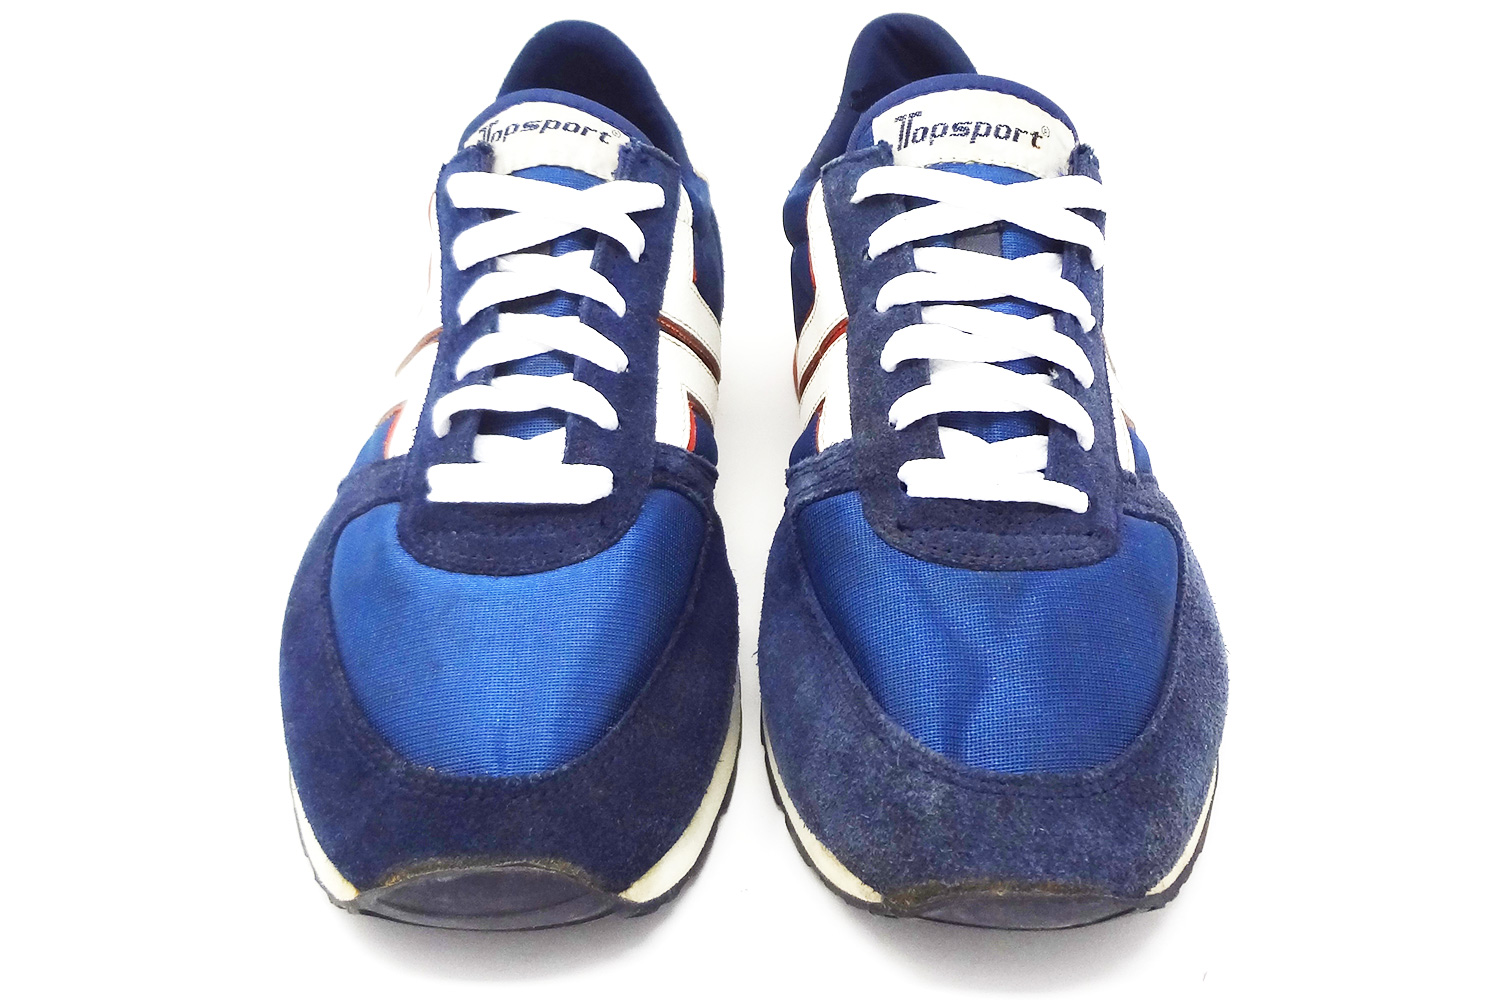 Old school 1980s Topsport vintage sneakers @ The Deffest